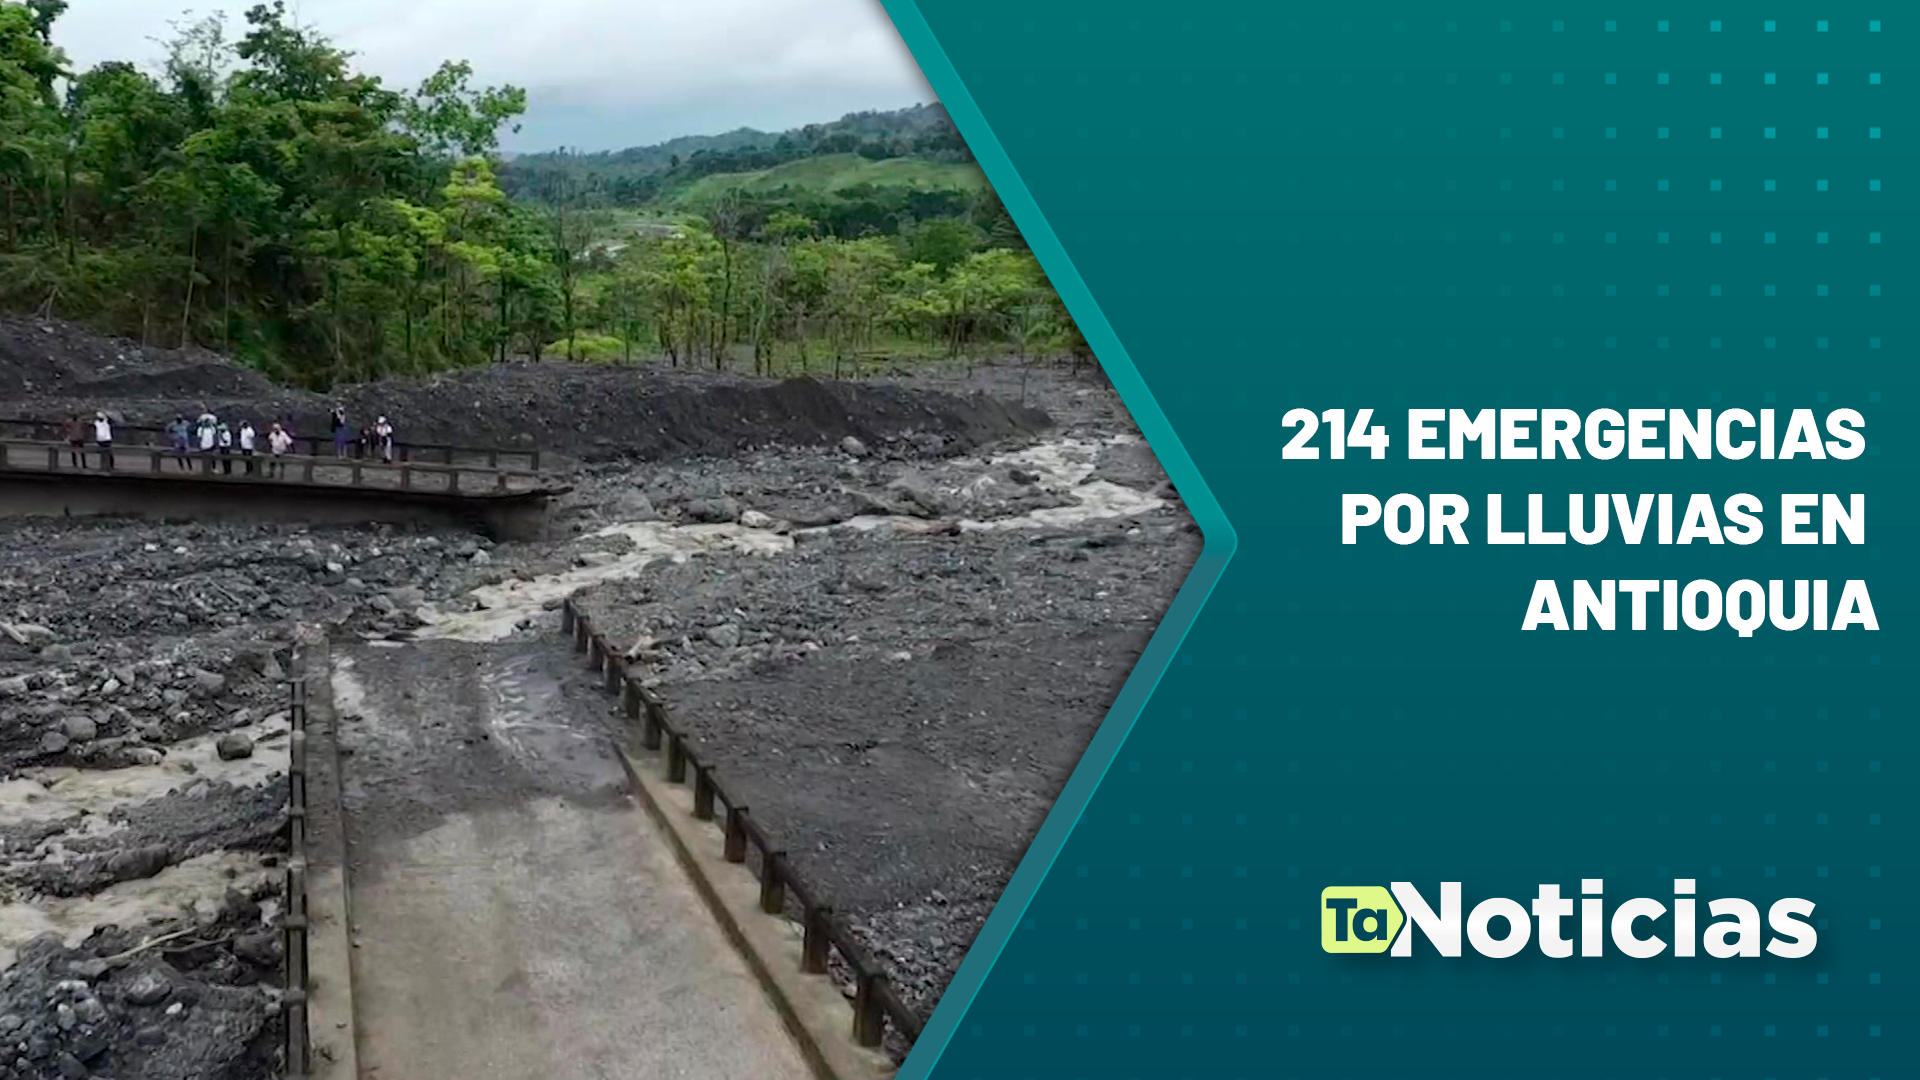 214 emergencias por lluvias en Antioquia